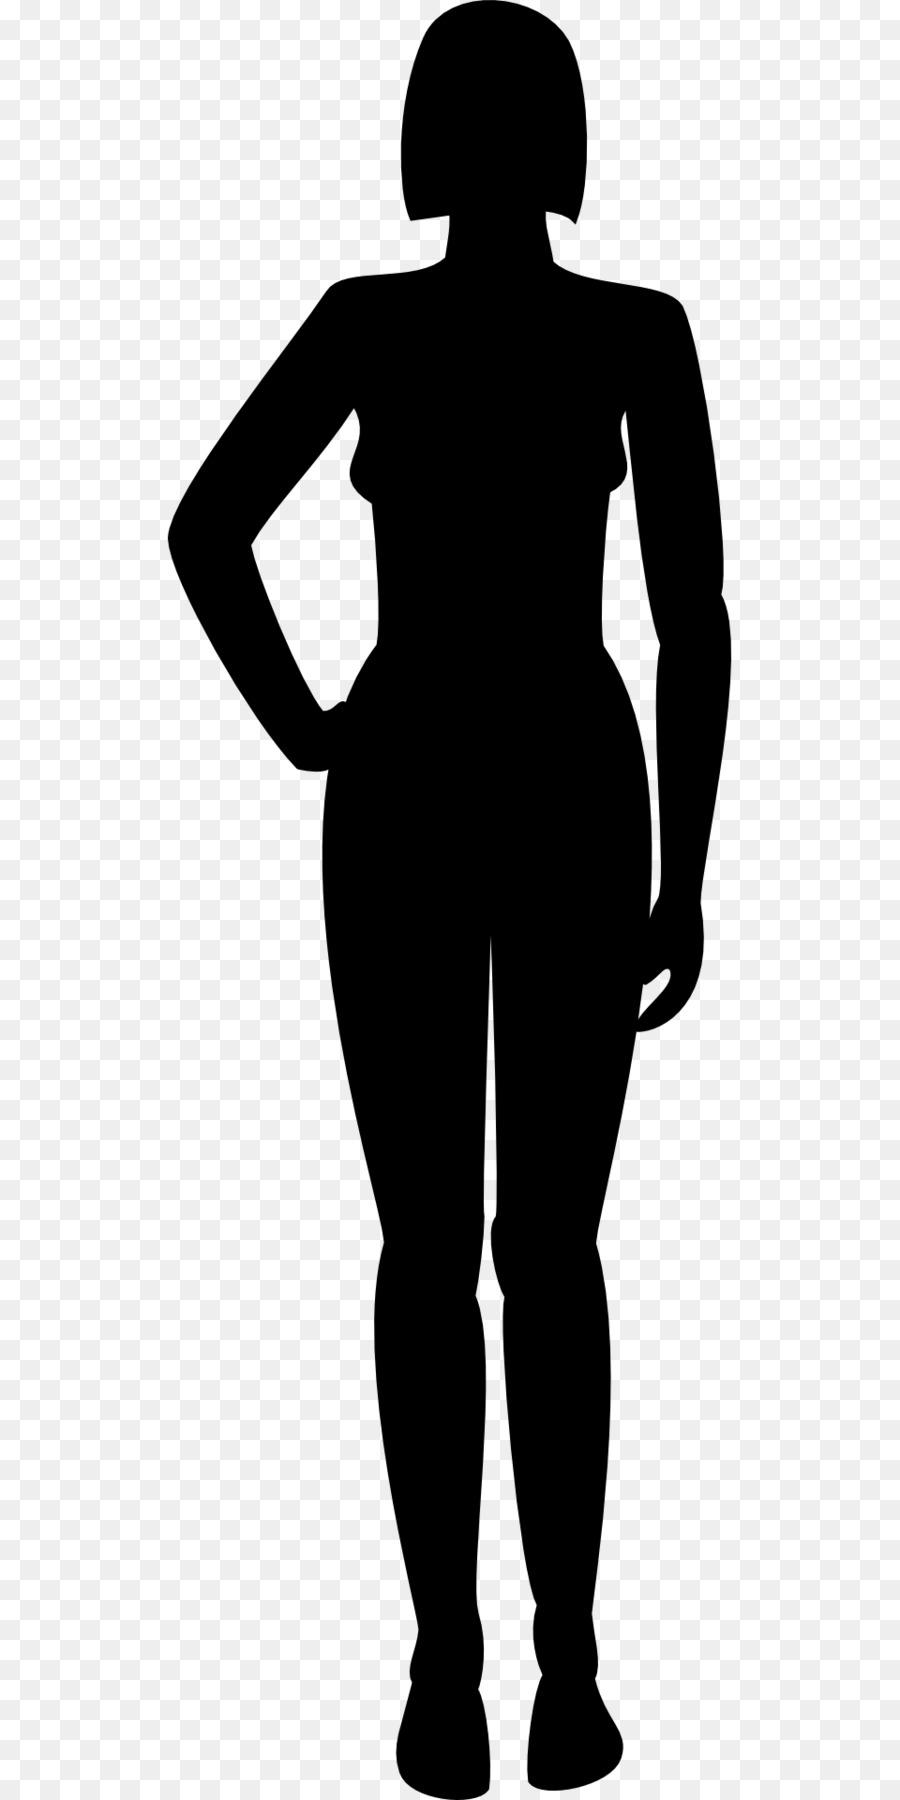 Silhouette Sticker Woman - female woman png download - 960*1920 - Free Transparent Silhouette png Download.